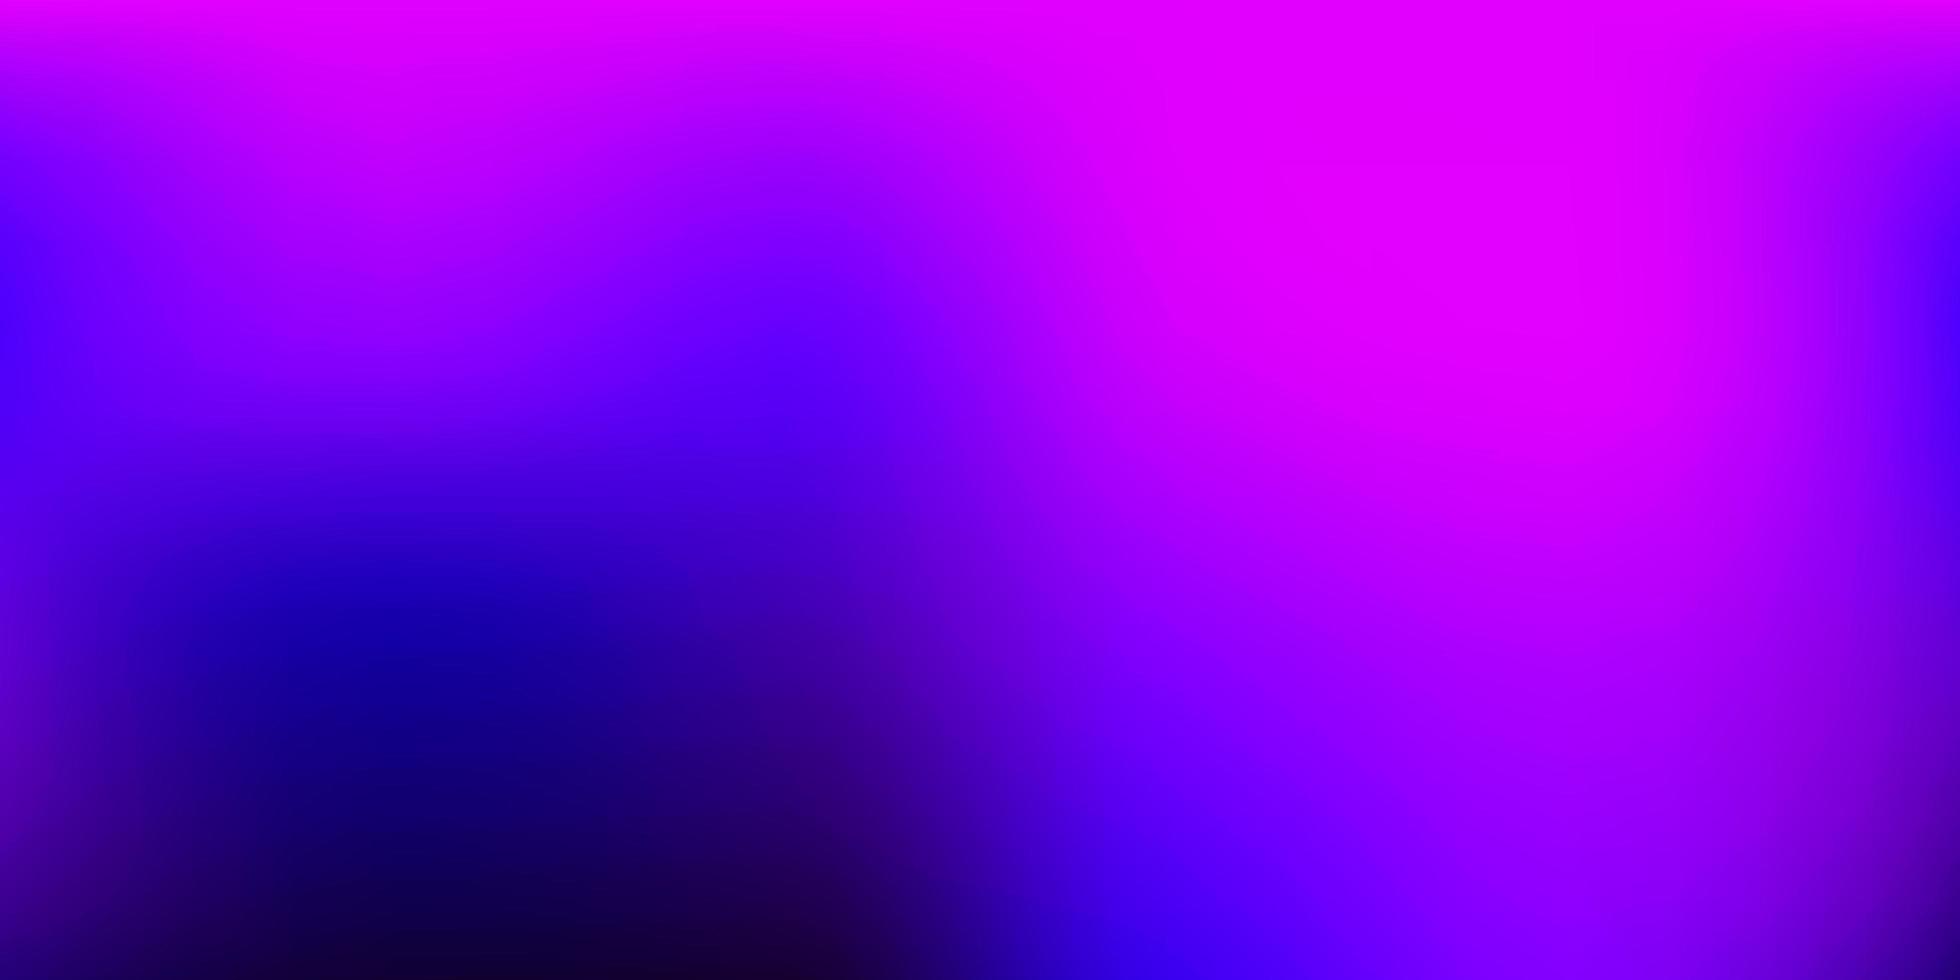 Dark Purple Pink vector gradient blur texture